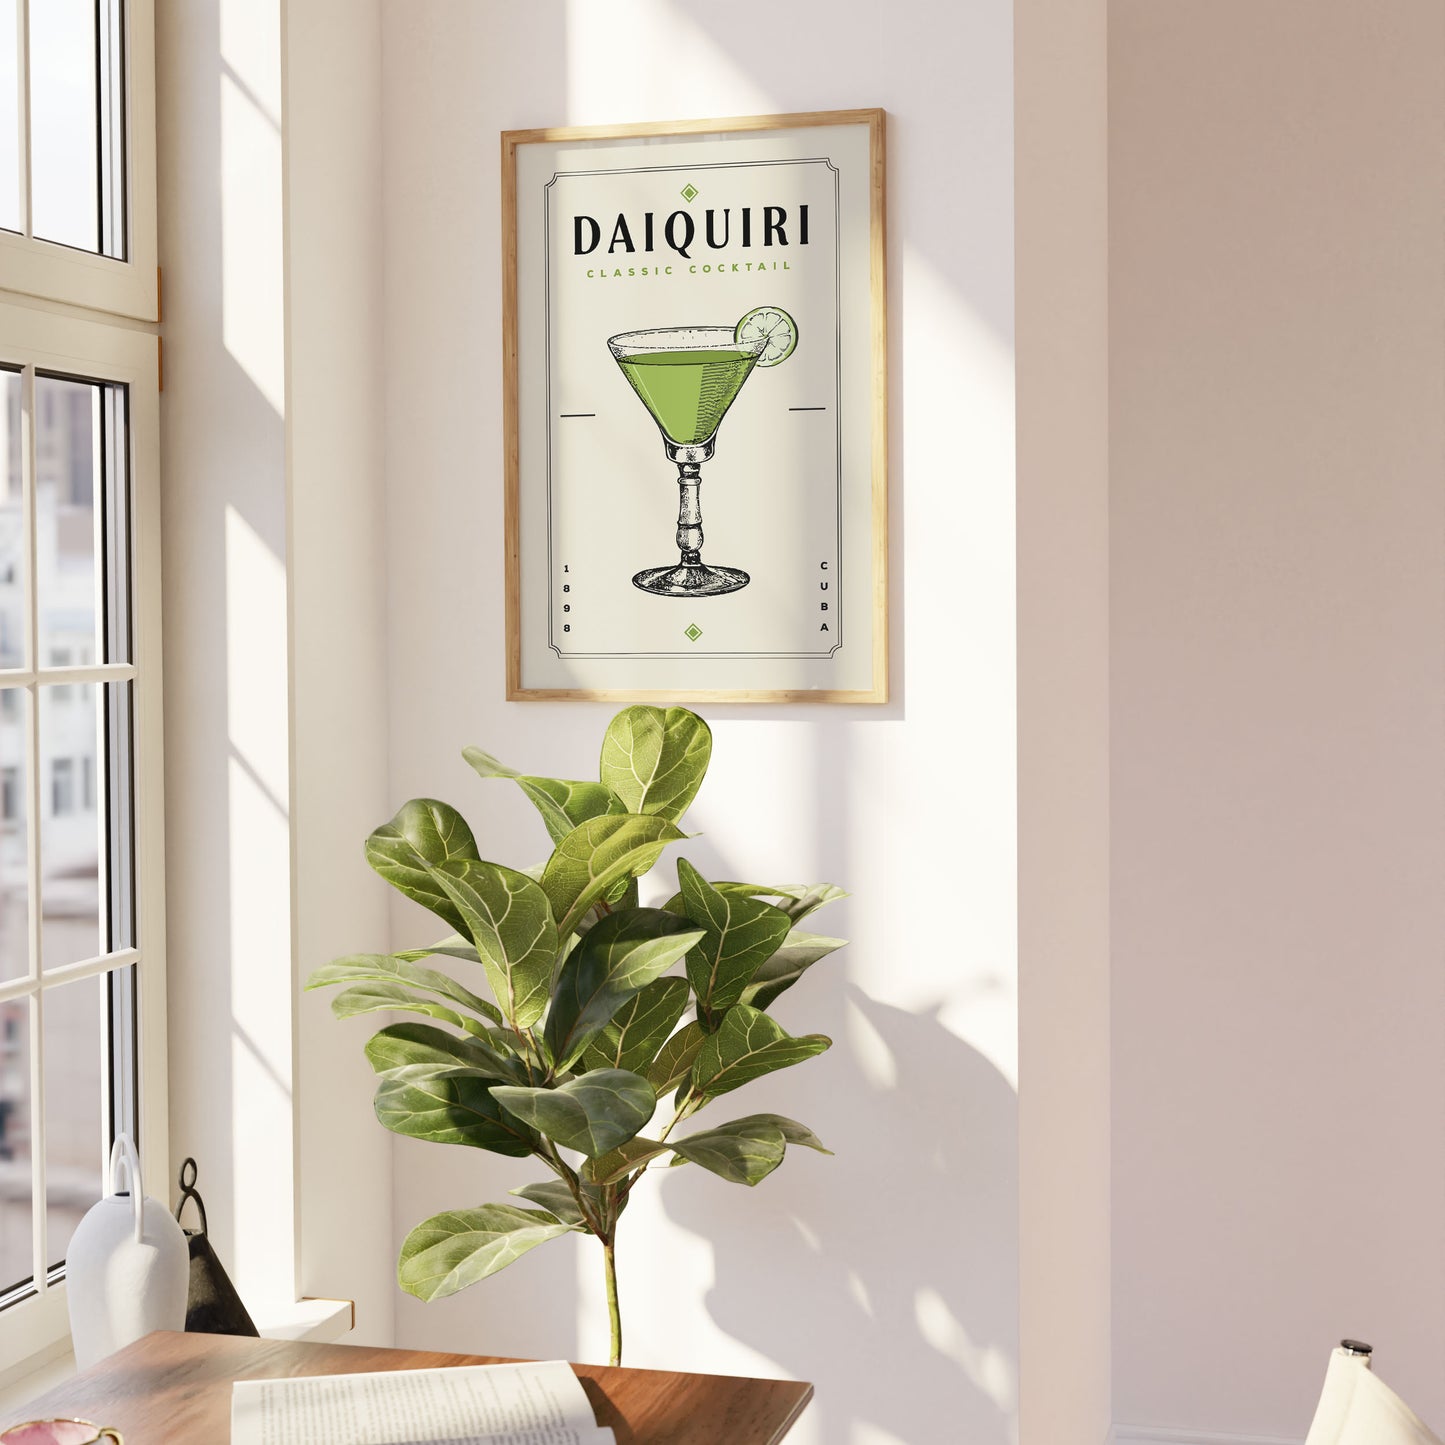 Daiquiri - Minimalist Cocktail Poster